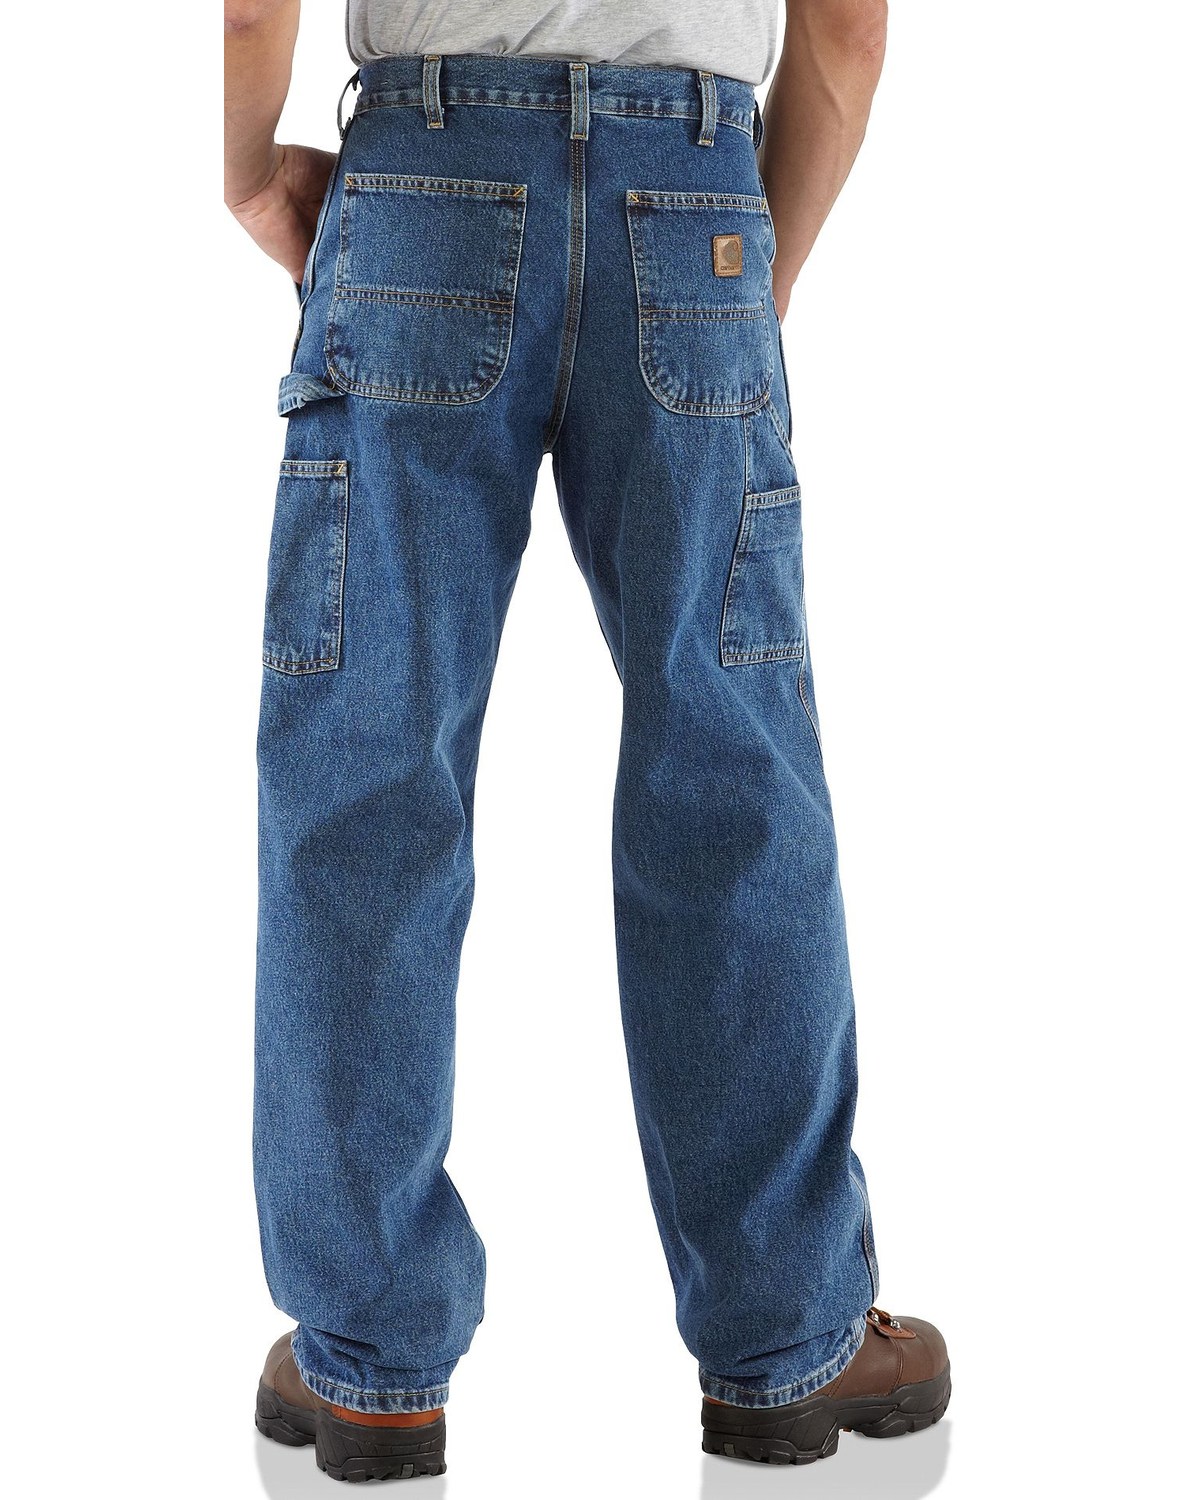 jeans for skinny teenage guys